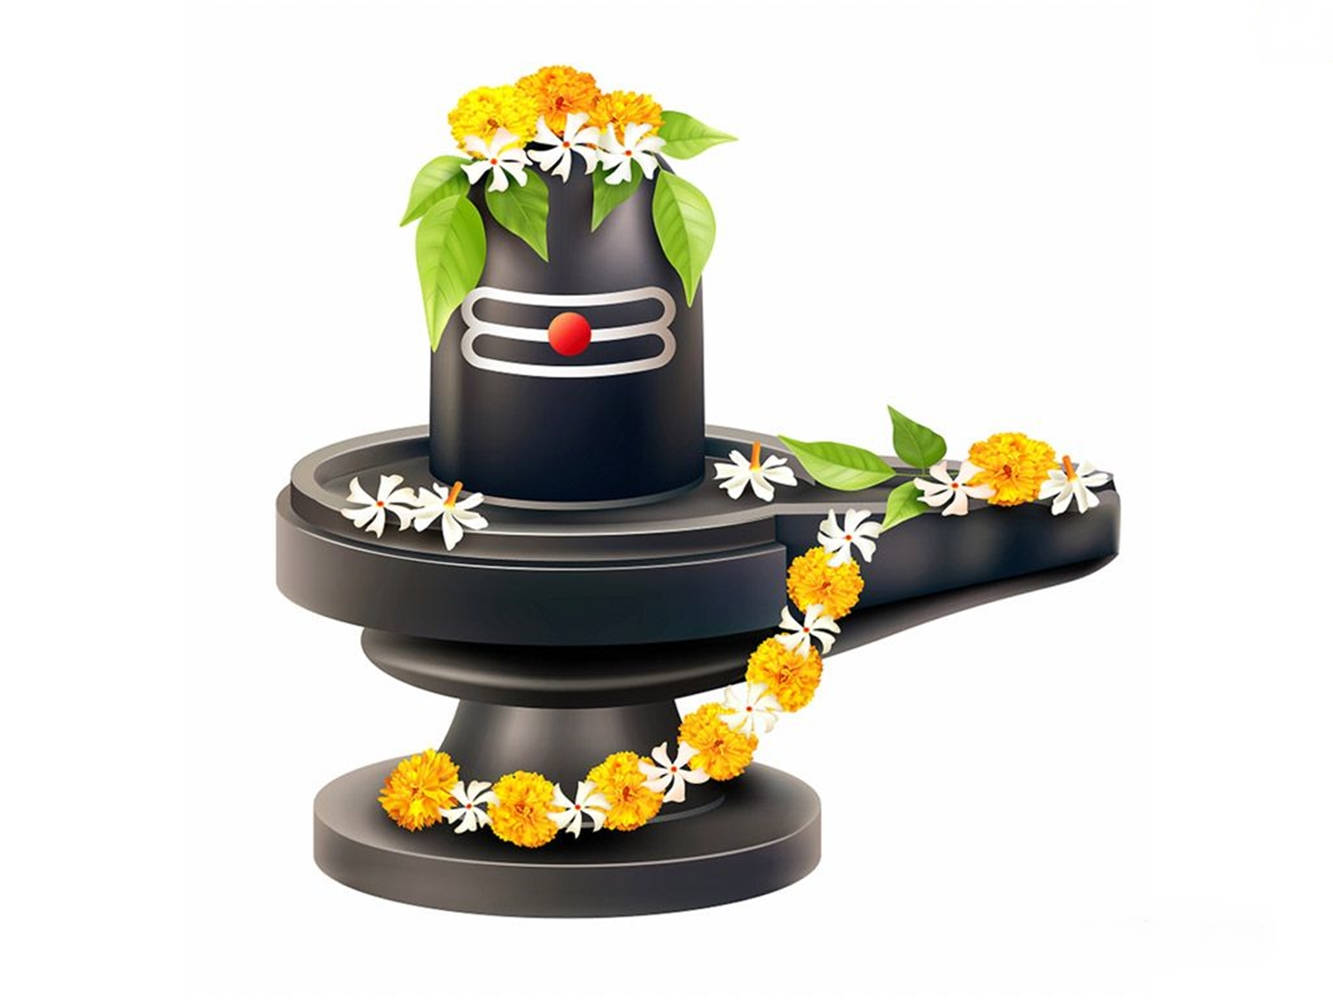 Lingamde Shiva En Forma De Black Tripundra. Fondo de pantalla